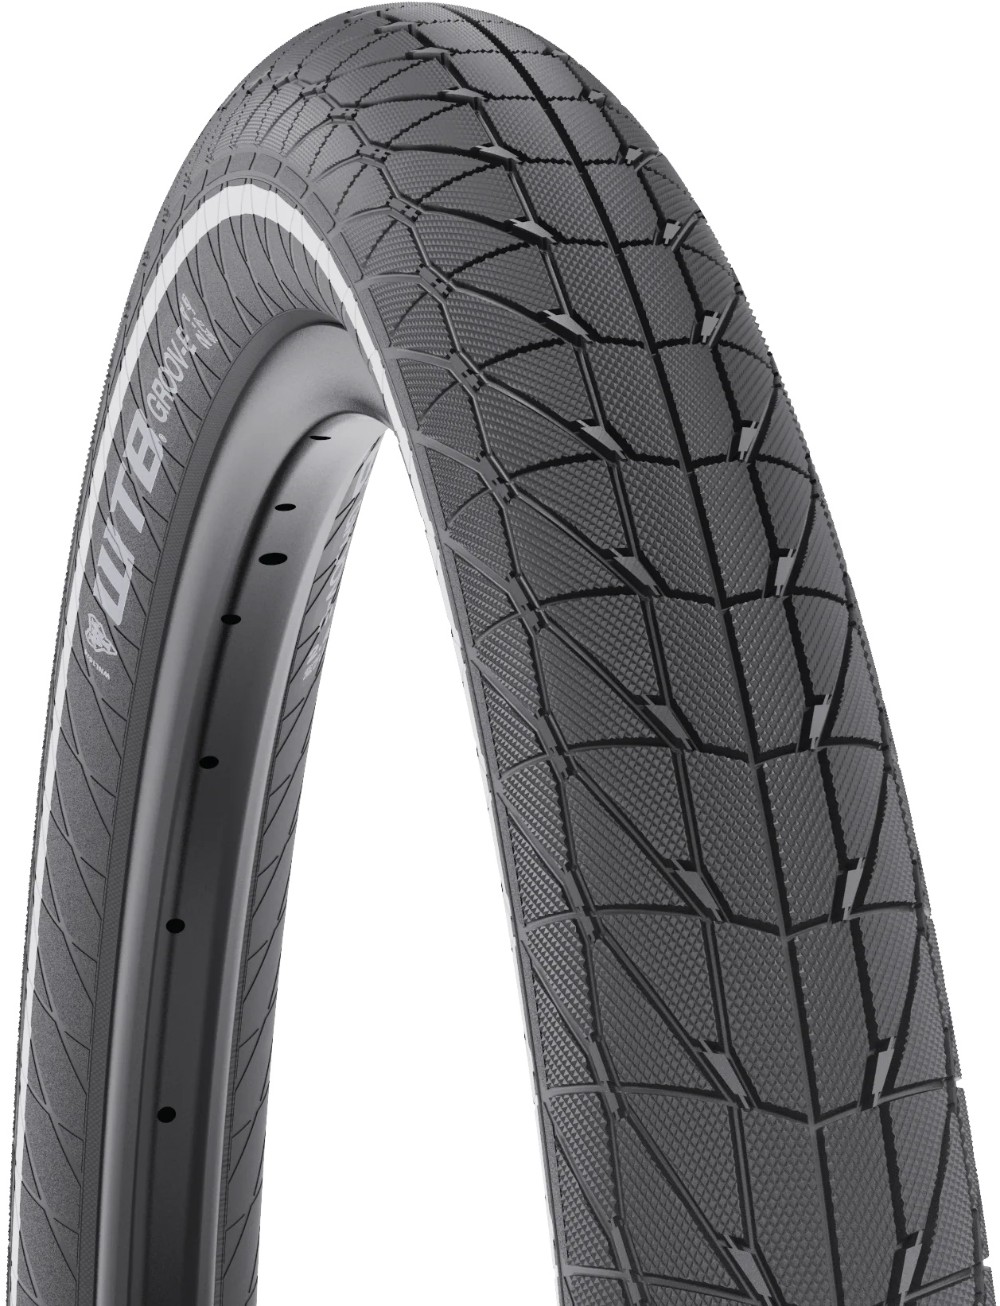 Groov-E Comp 60tpi DNA FG E50 27.5" Tyre with Reflective Strip image 0